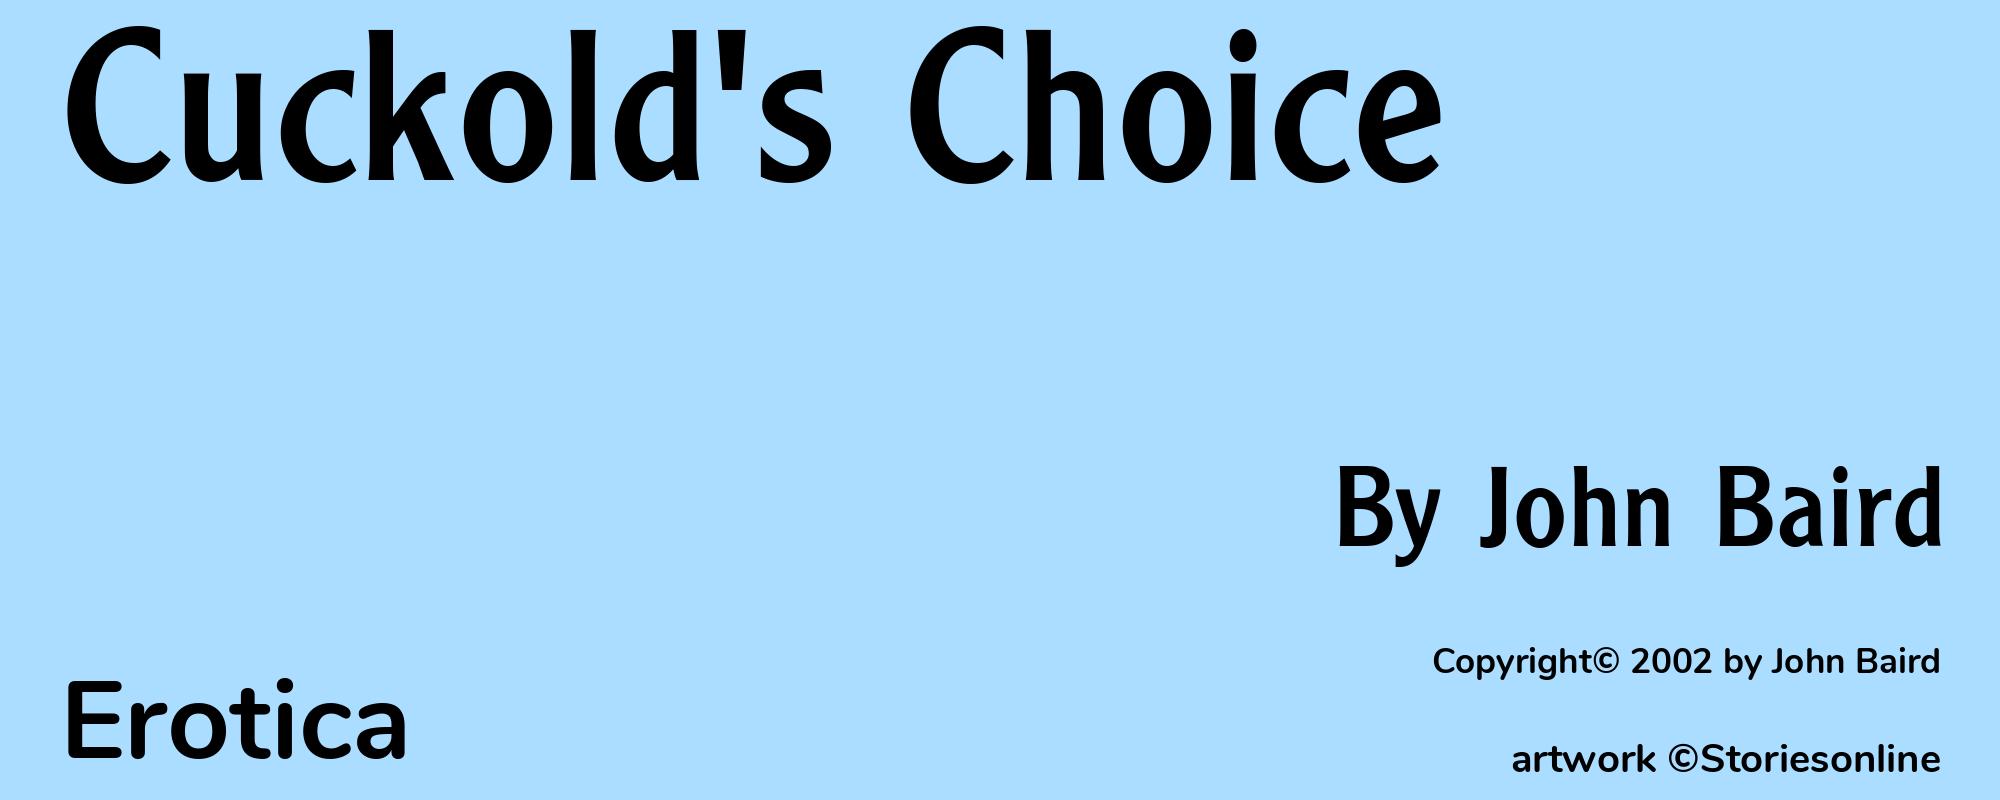 Cuckold's Choice - Cover